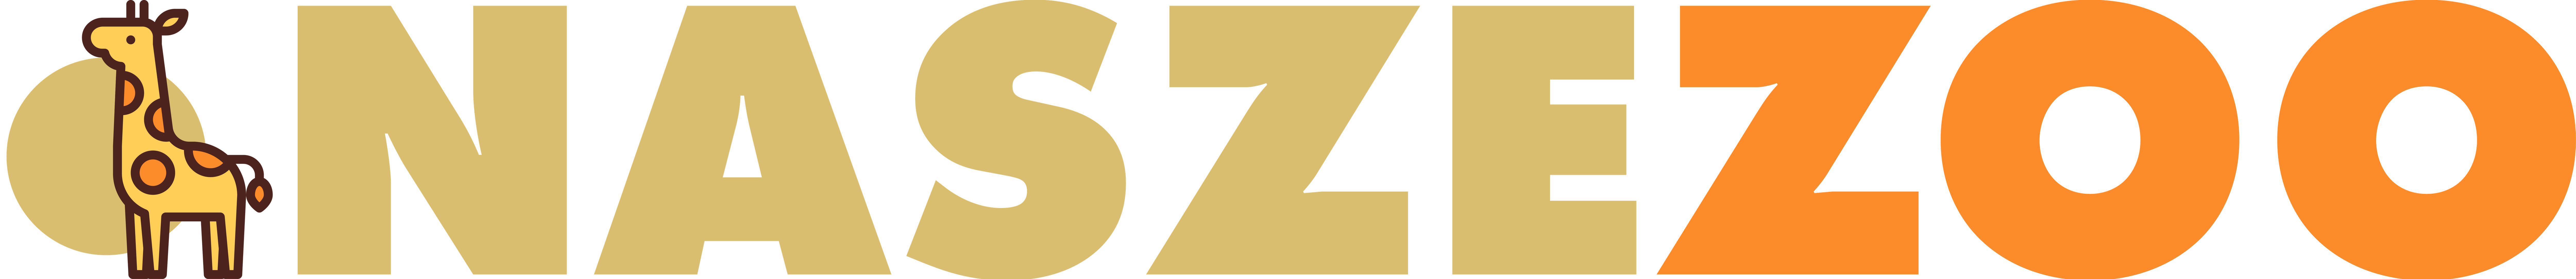 Logo naszezoo.com.pl